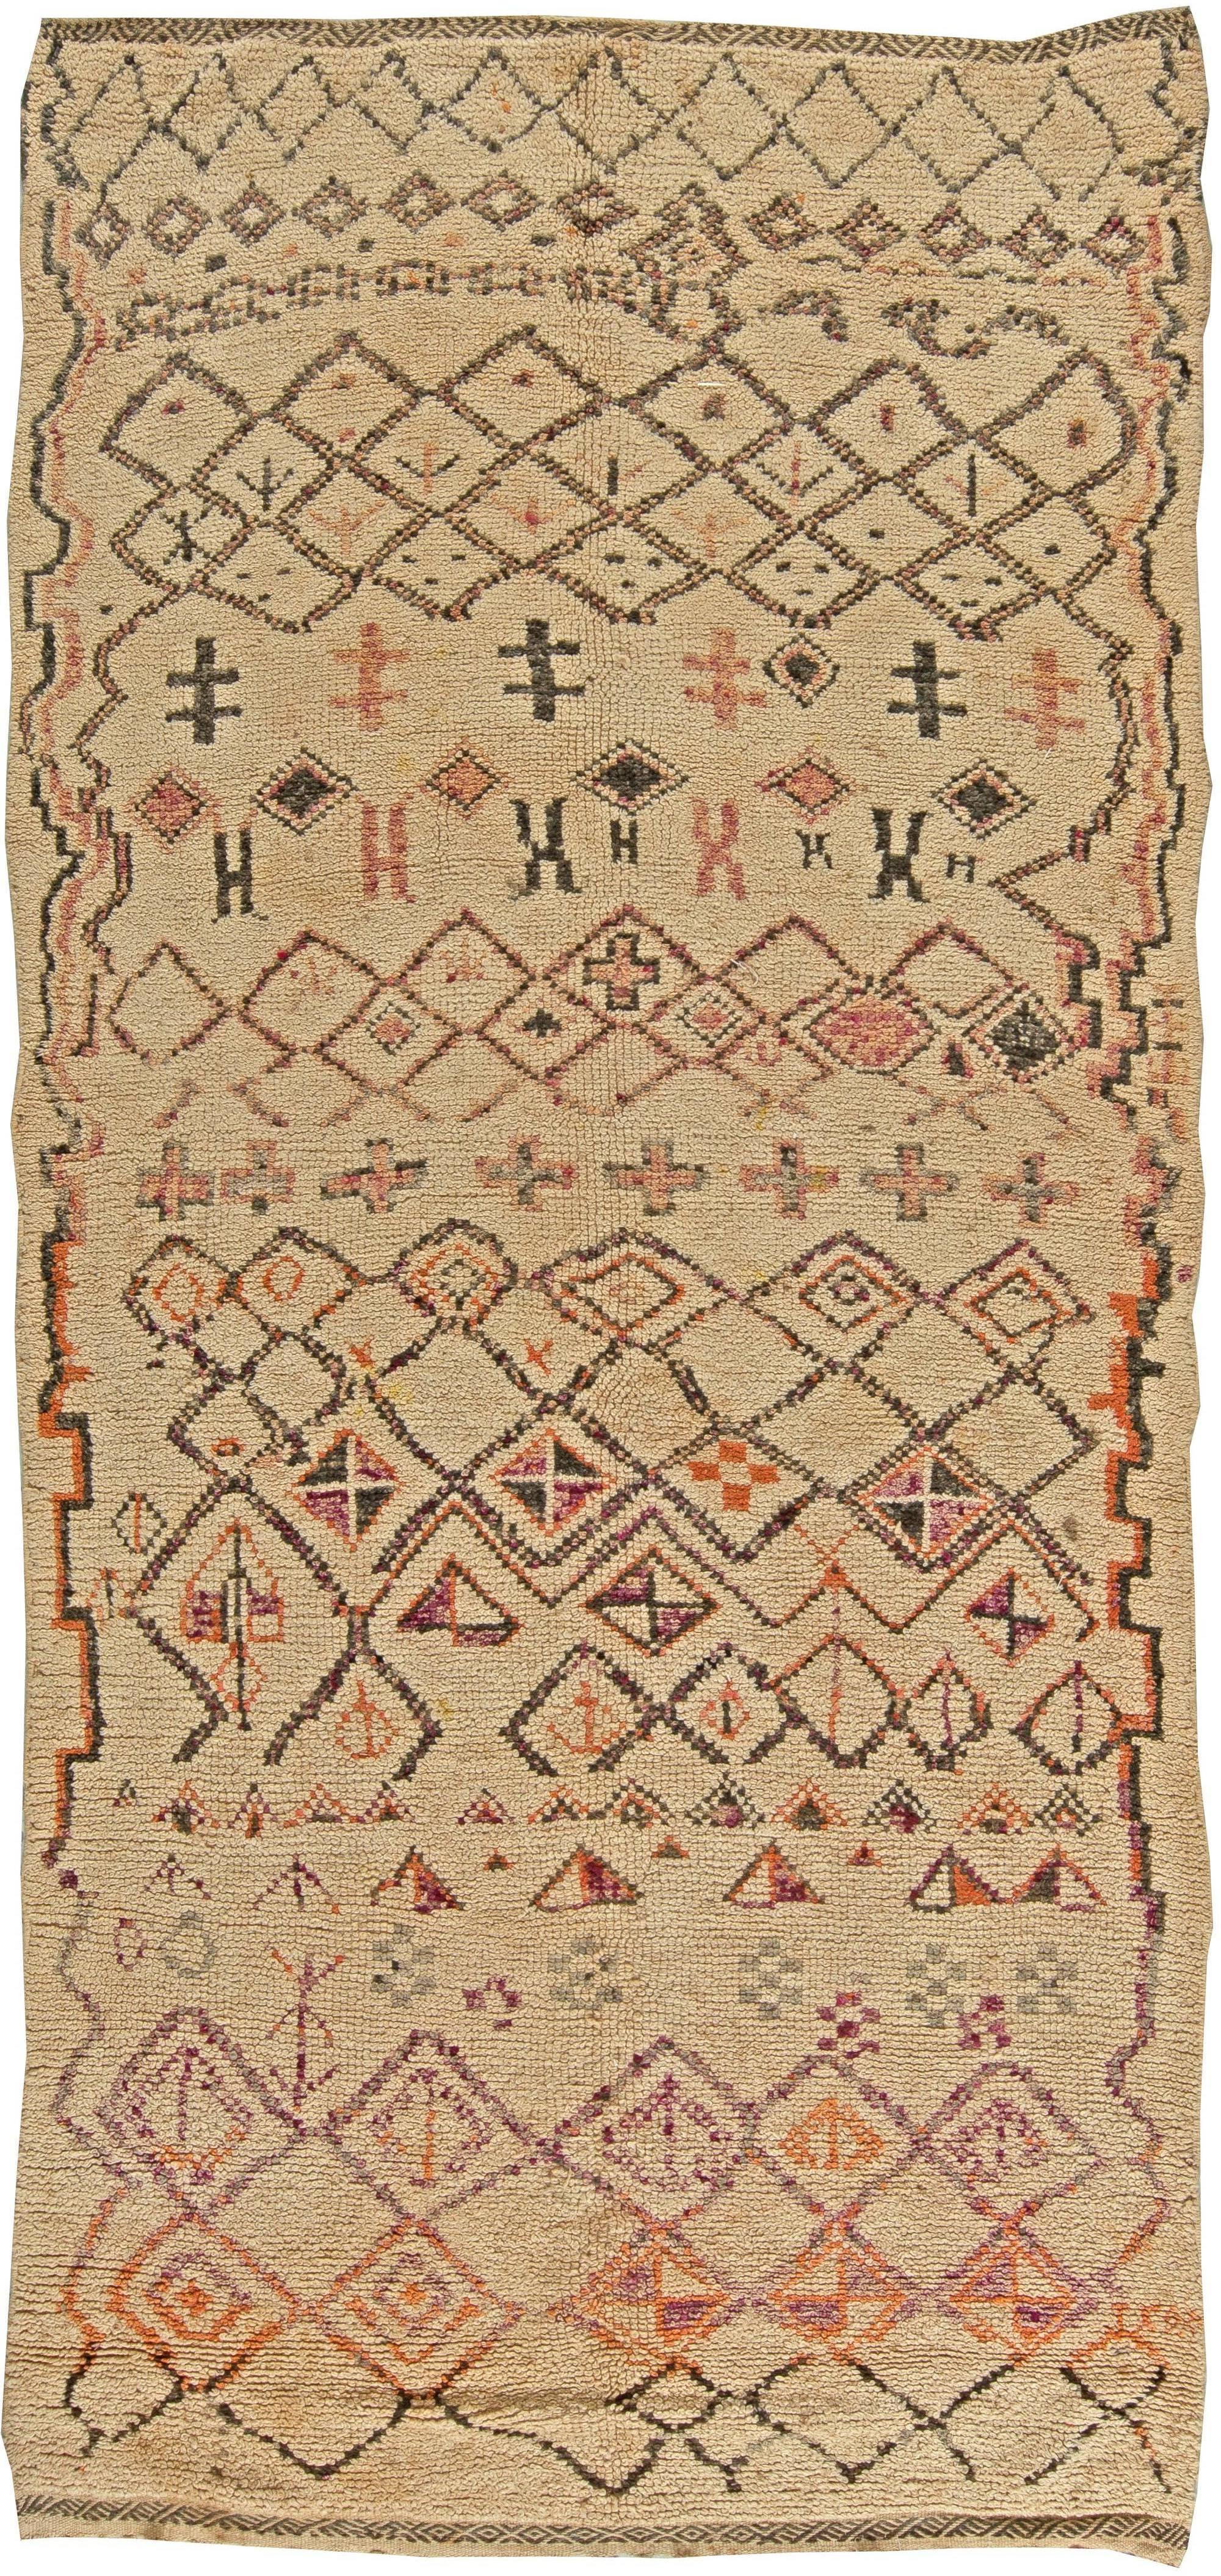 Vintage Tribal Handmade Moroccan Natural Wool Rug For Sale